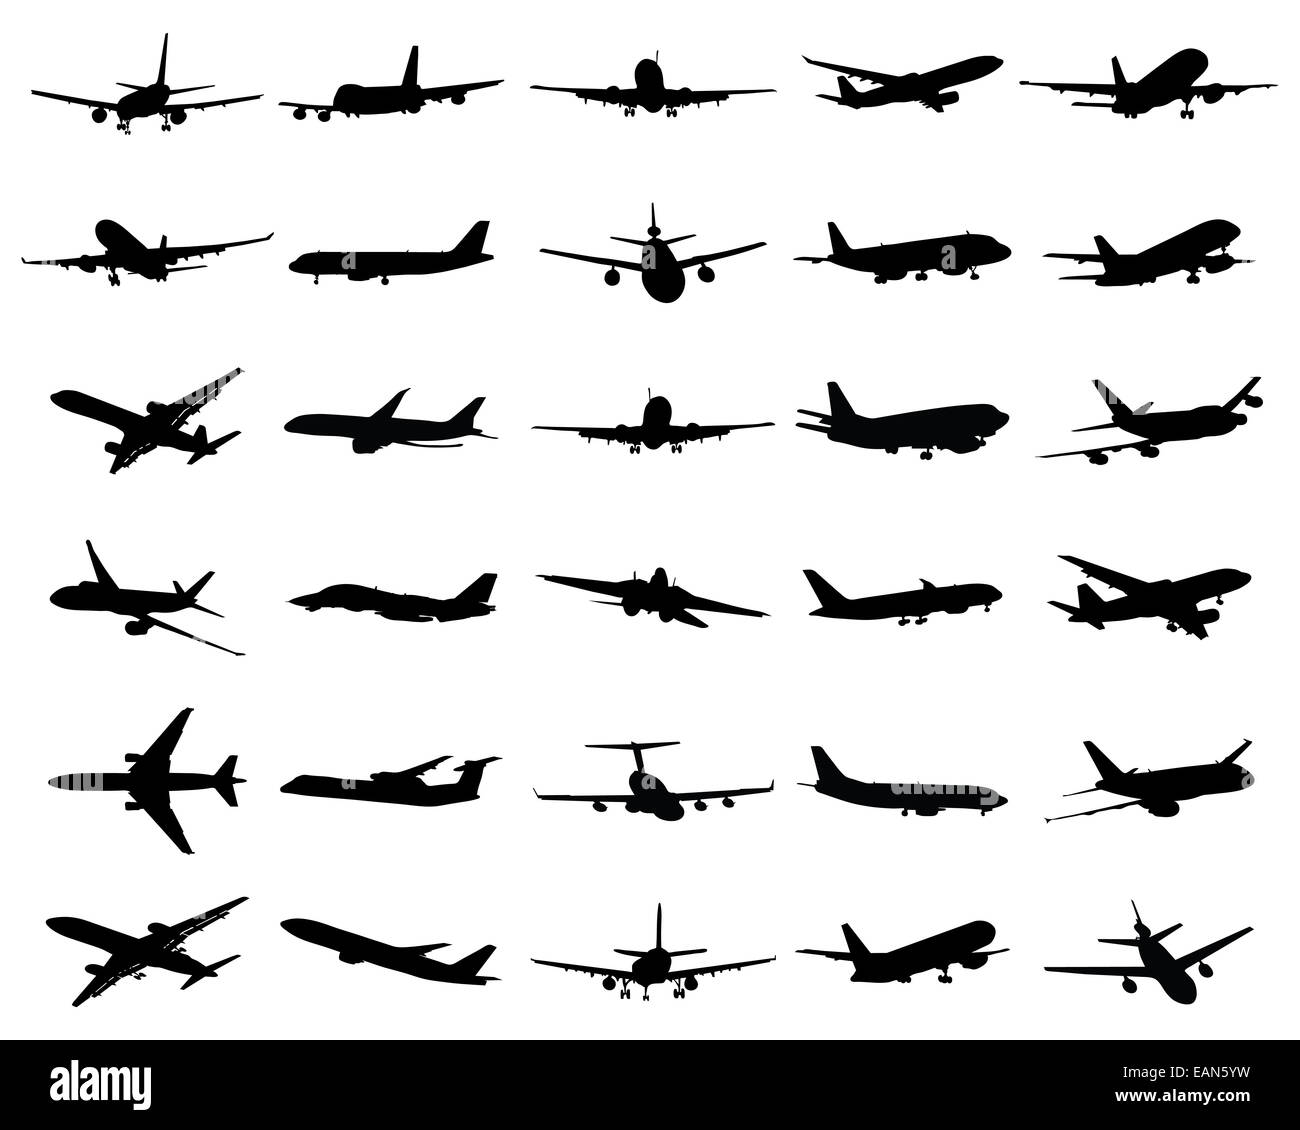 aircrafts, Stock Photo